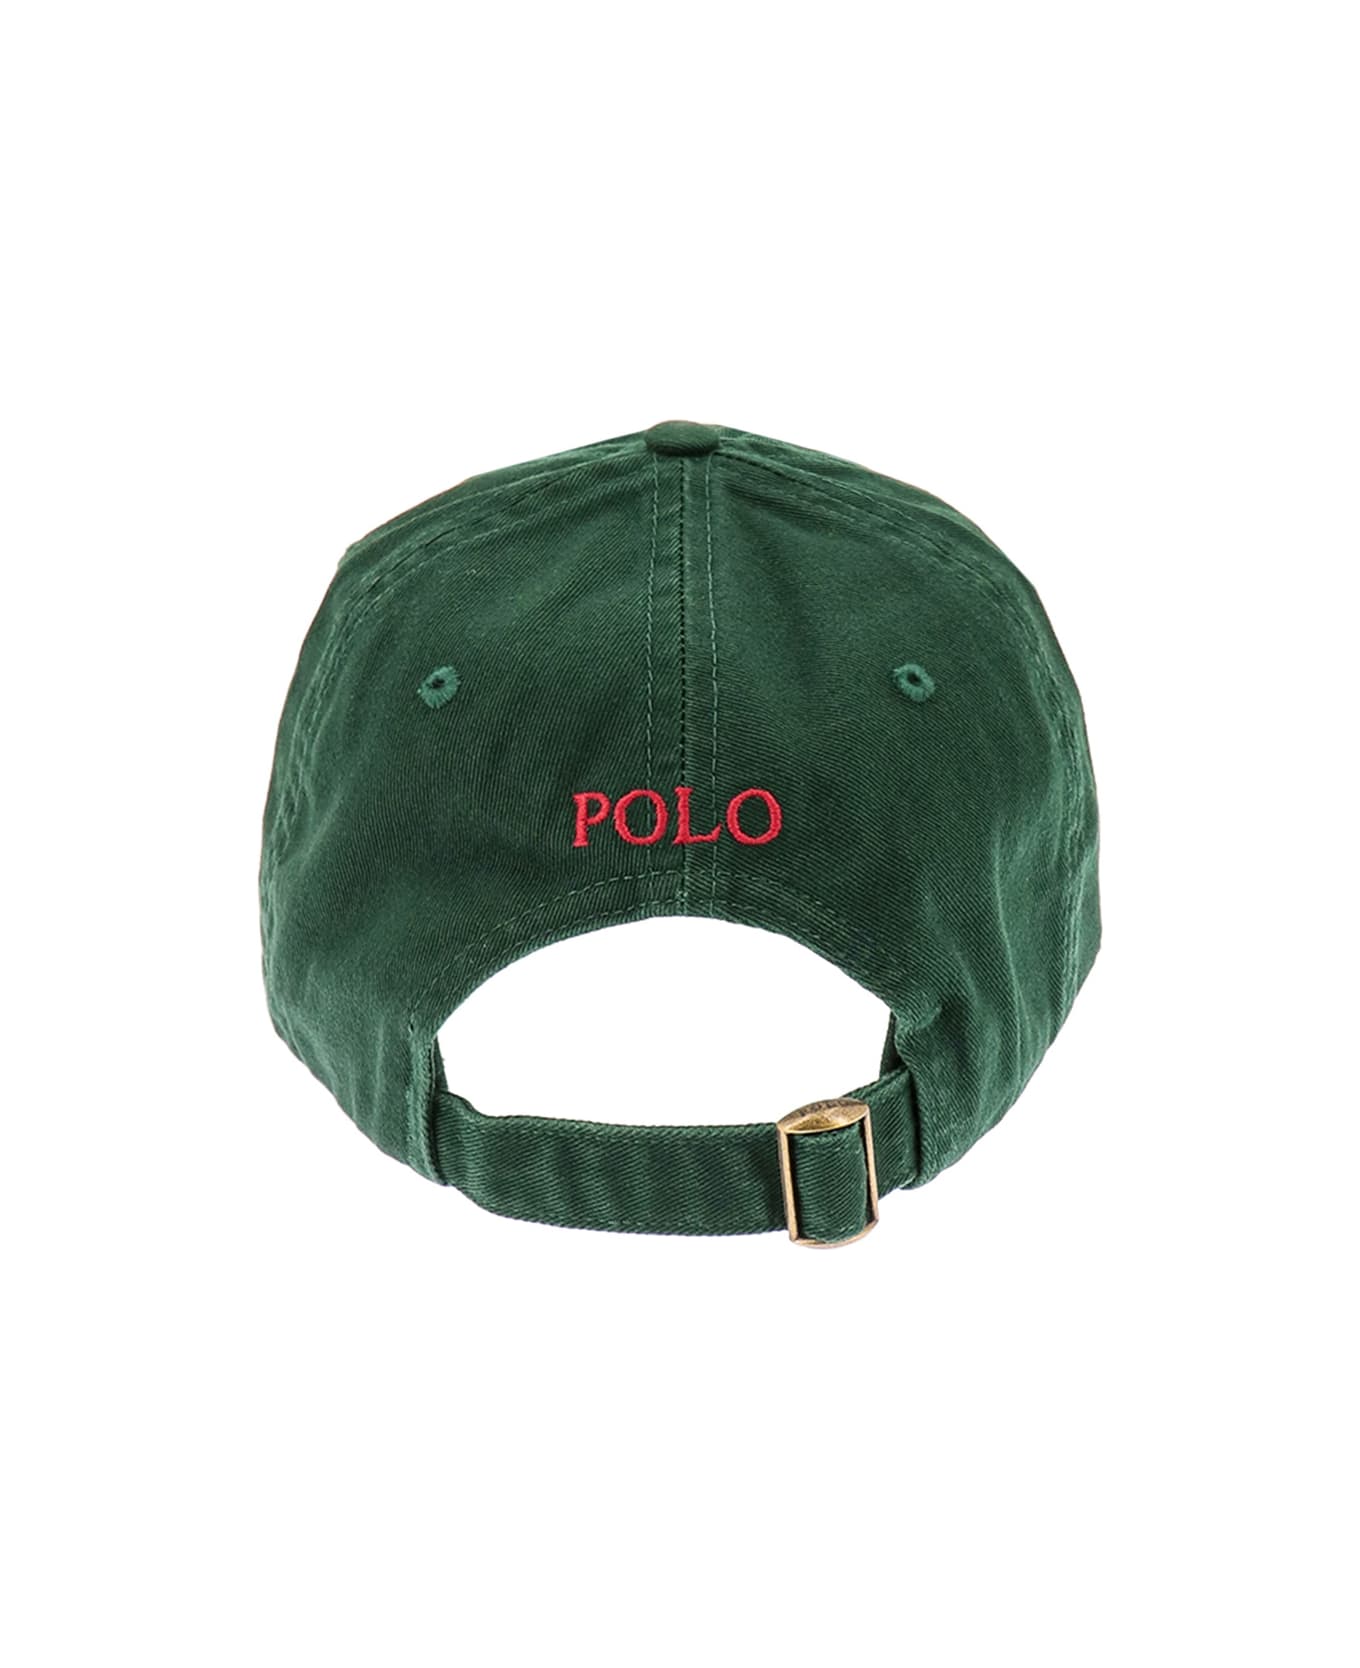 Polo Ralph Lauren Dark Green Baseball Cap With Contrasting Pony - Green